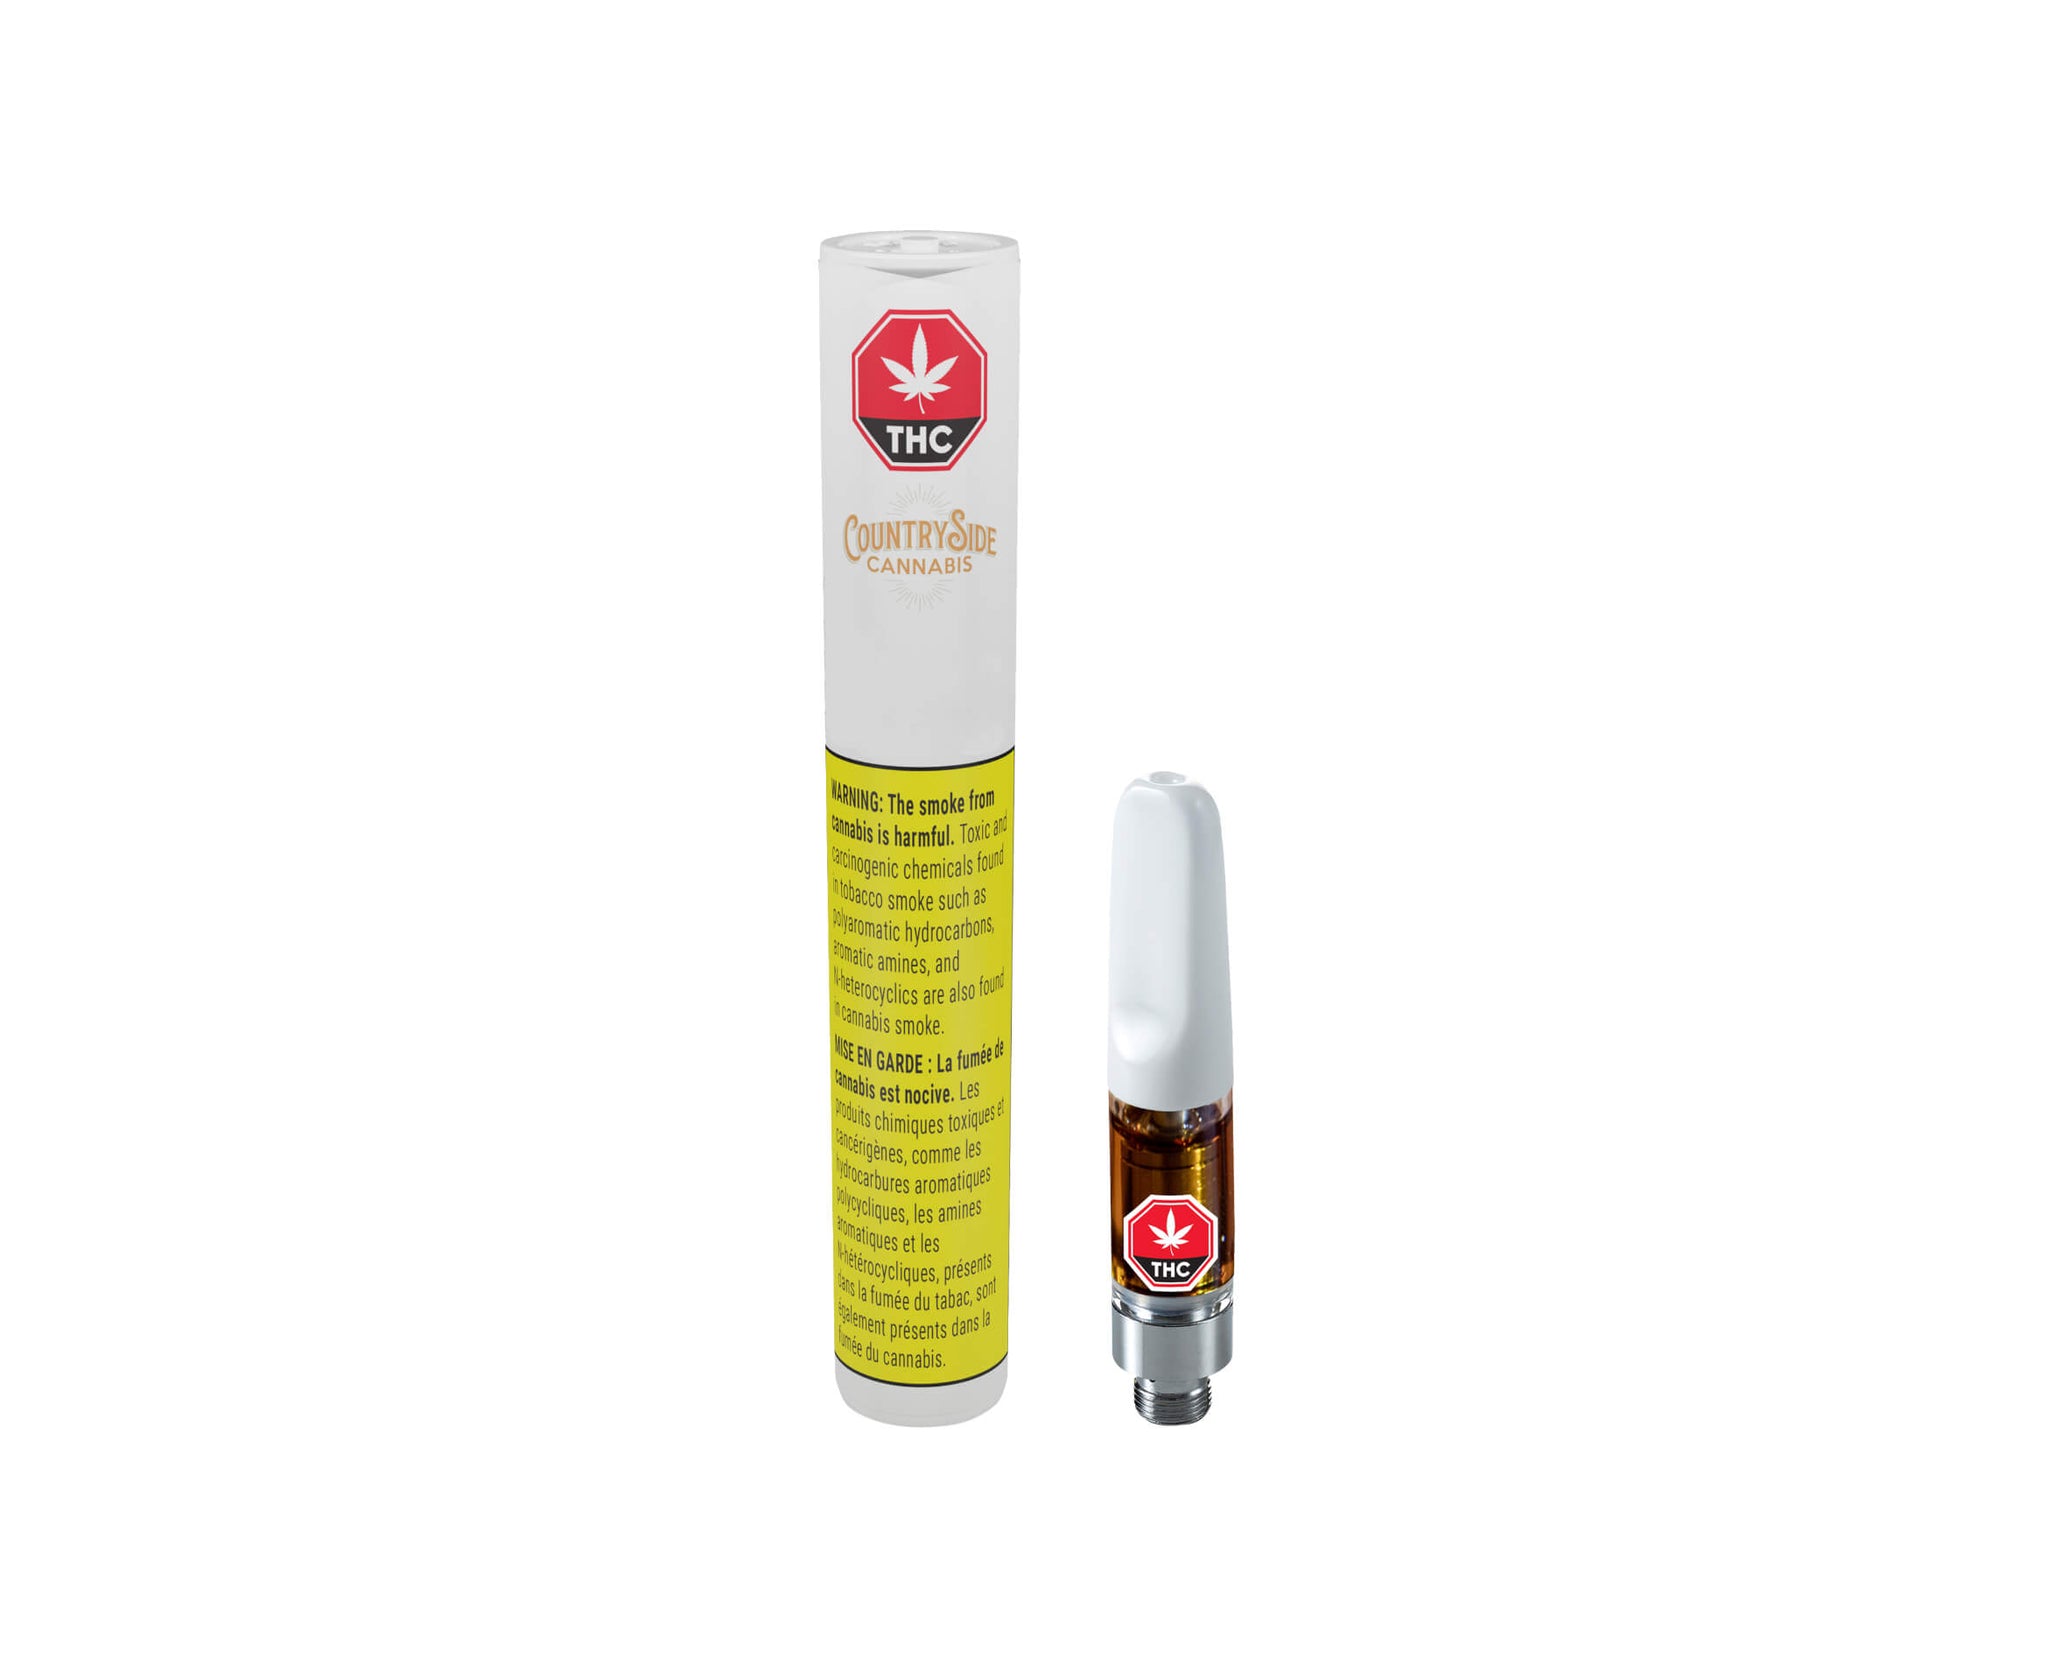 Countryside Cannabis Herer Haze Full Spectrum 1.0g Prefilled Vape Cartridge